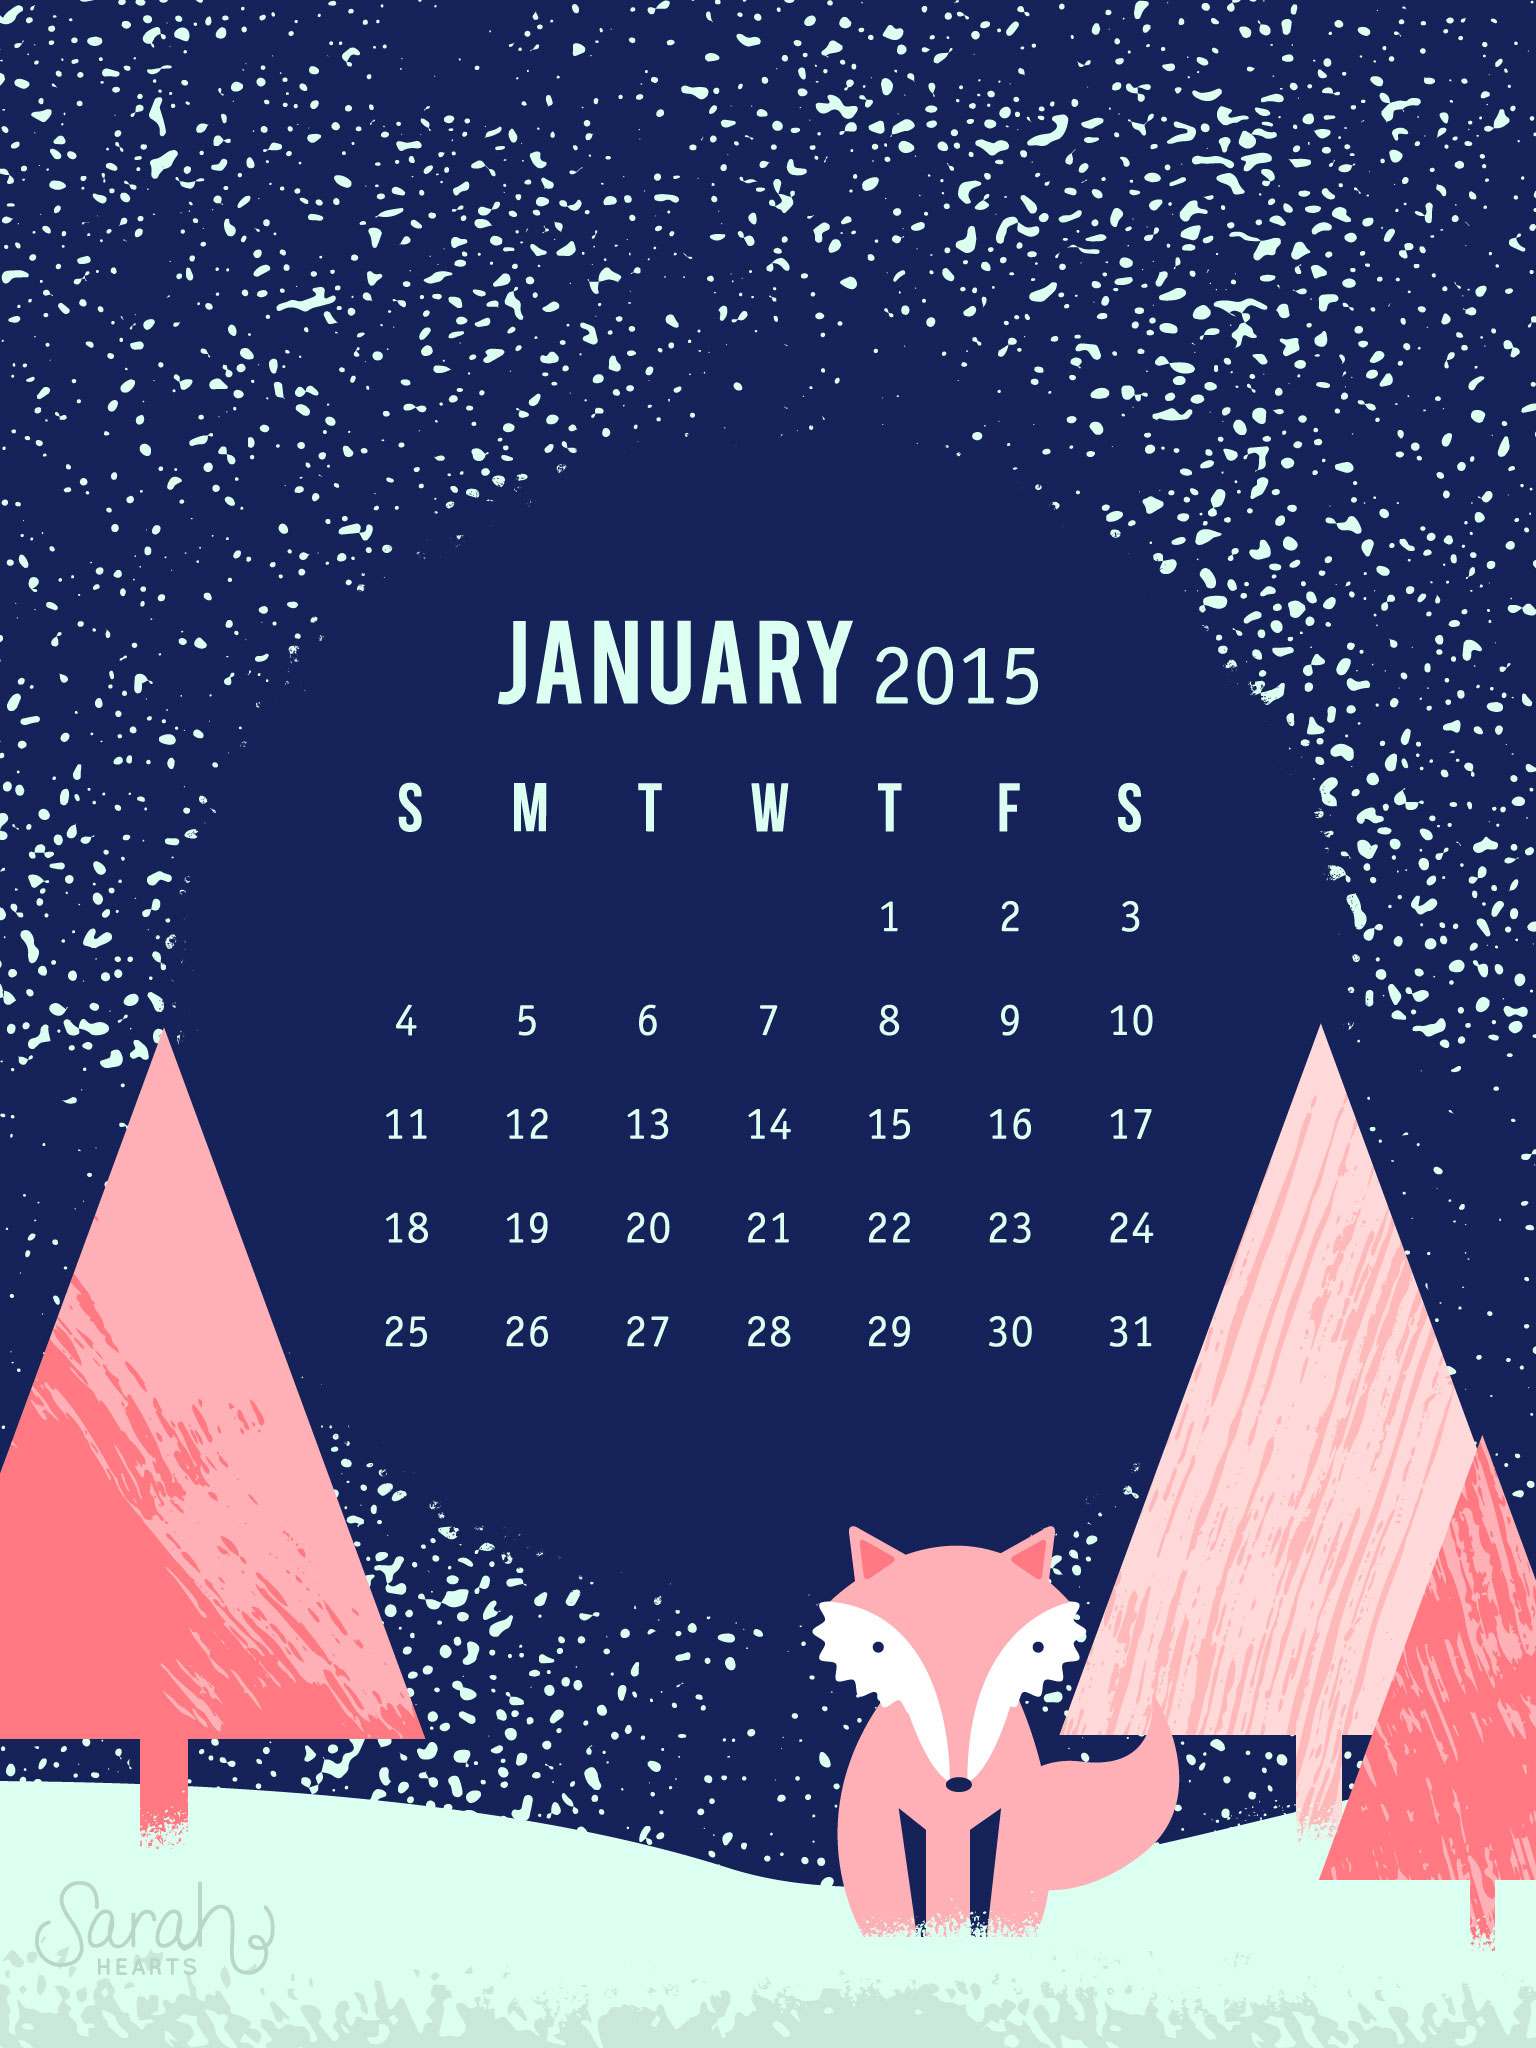 January 15 Calendar Wallpaper Sarah Hearts